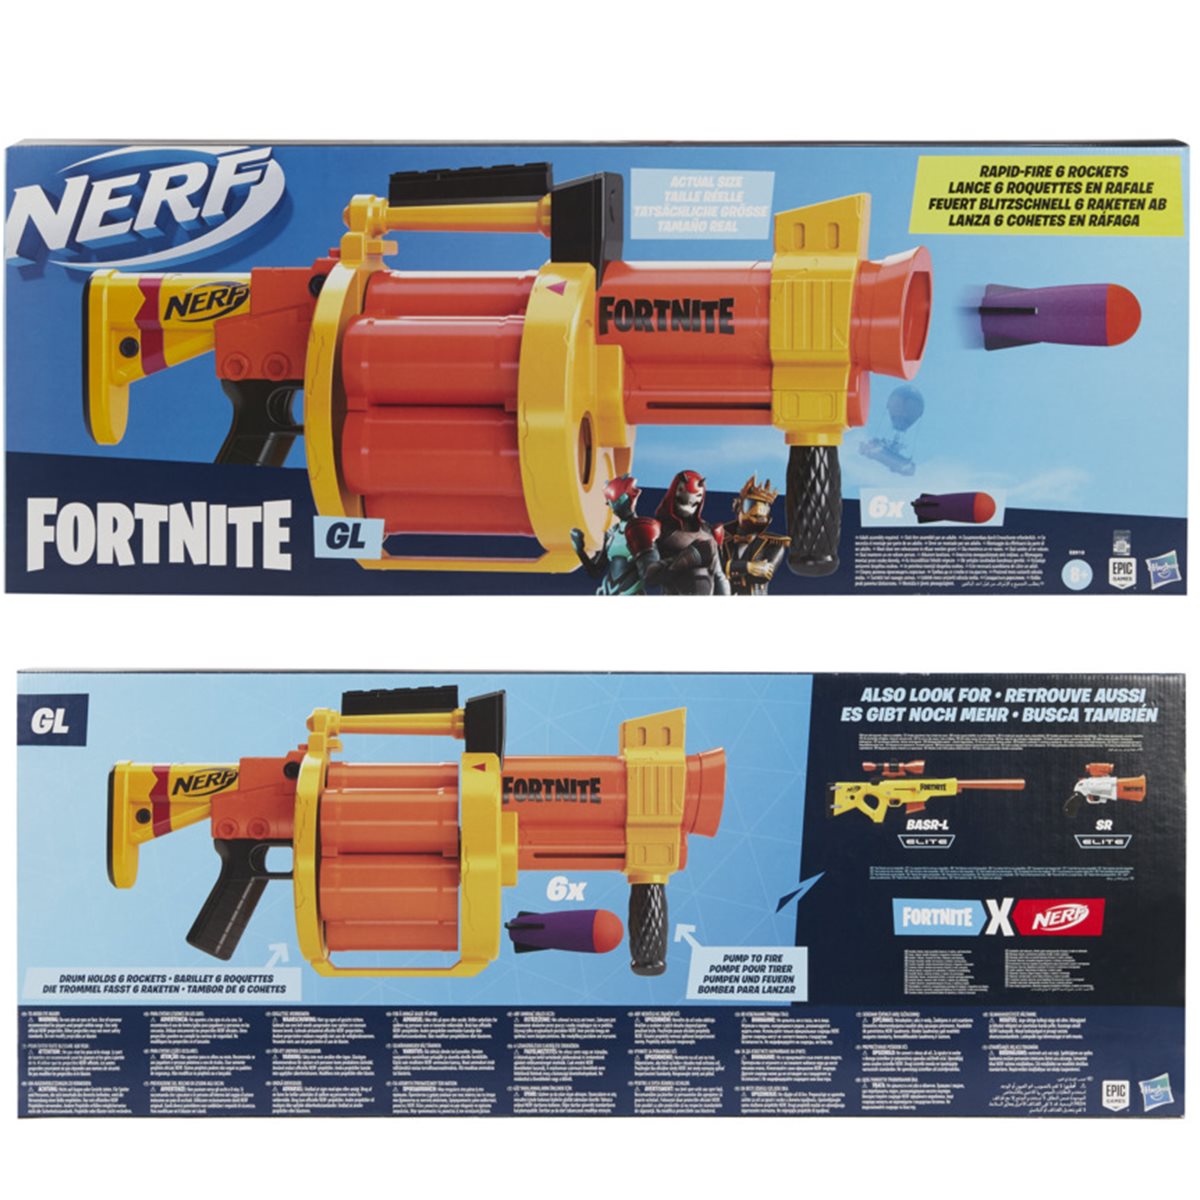 NERF Fortnite GL Blaster Qty X2 for sale online Hasbro 